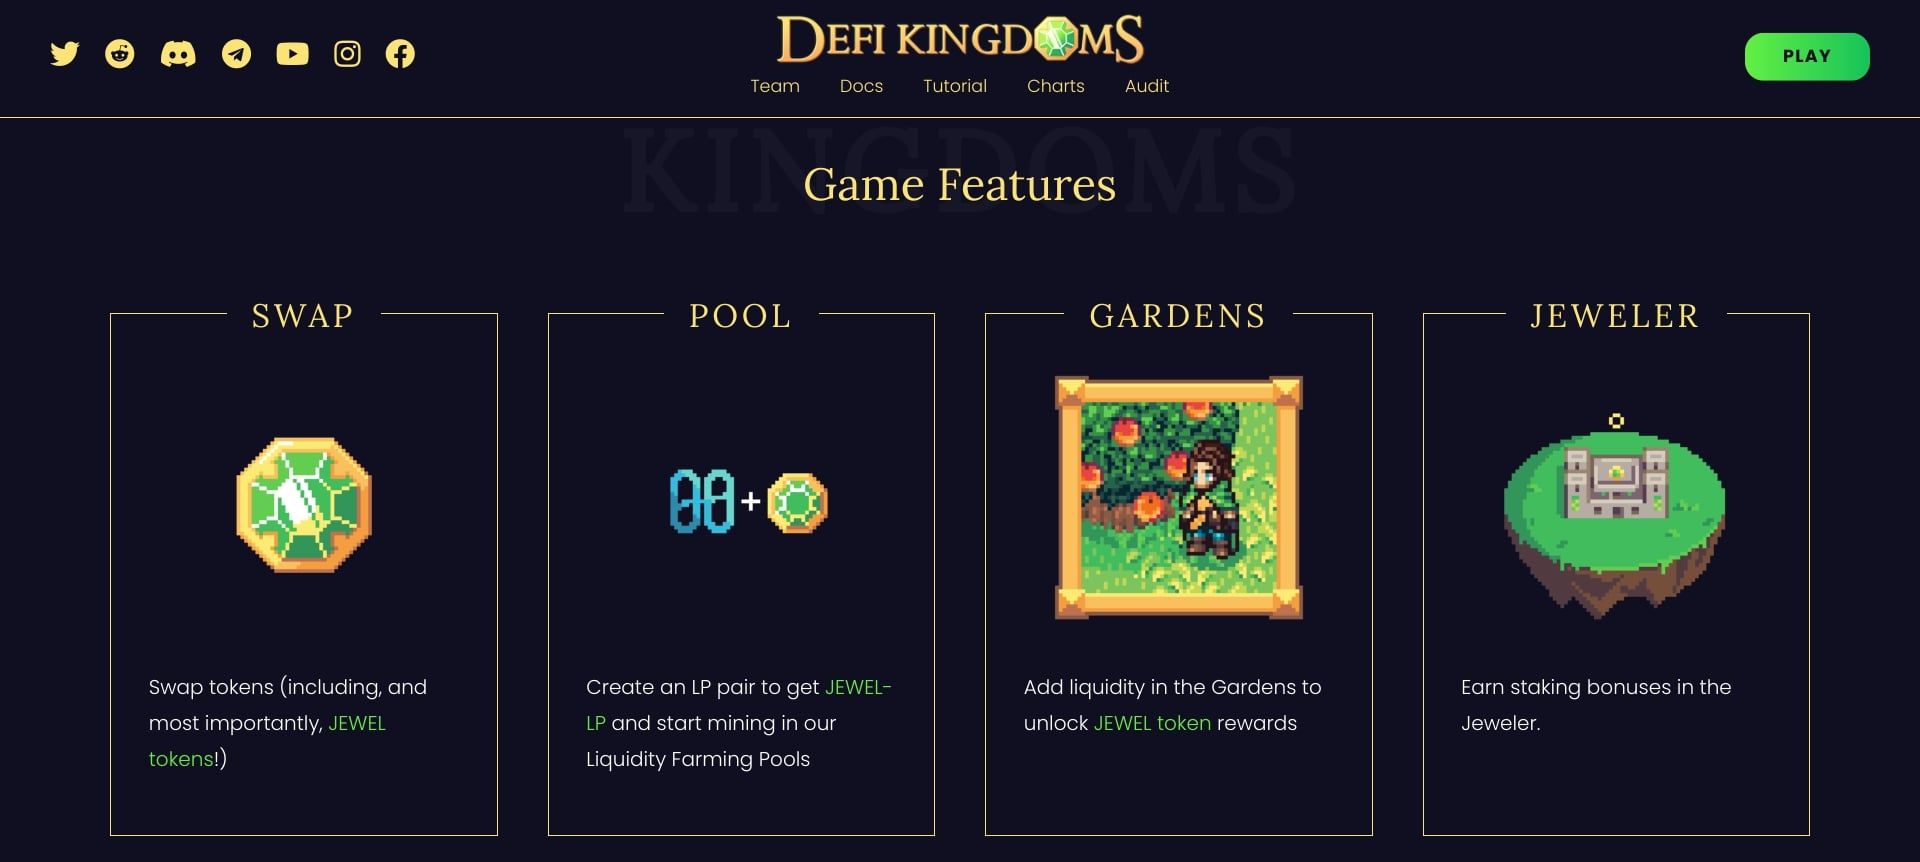 defi kingdoms website homepage screenshot